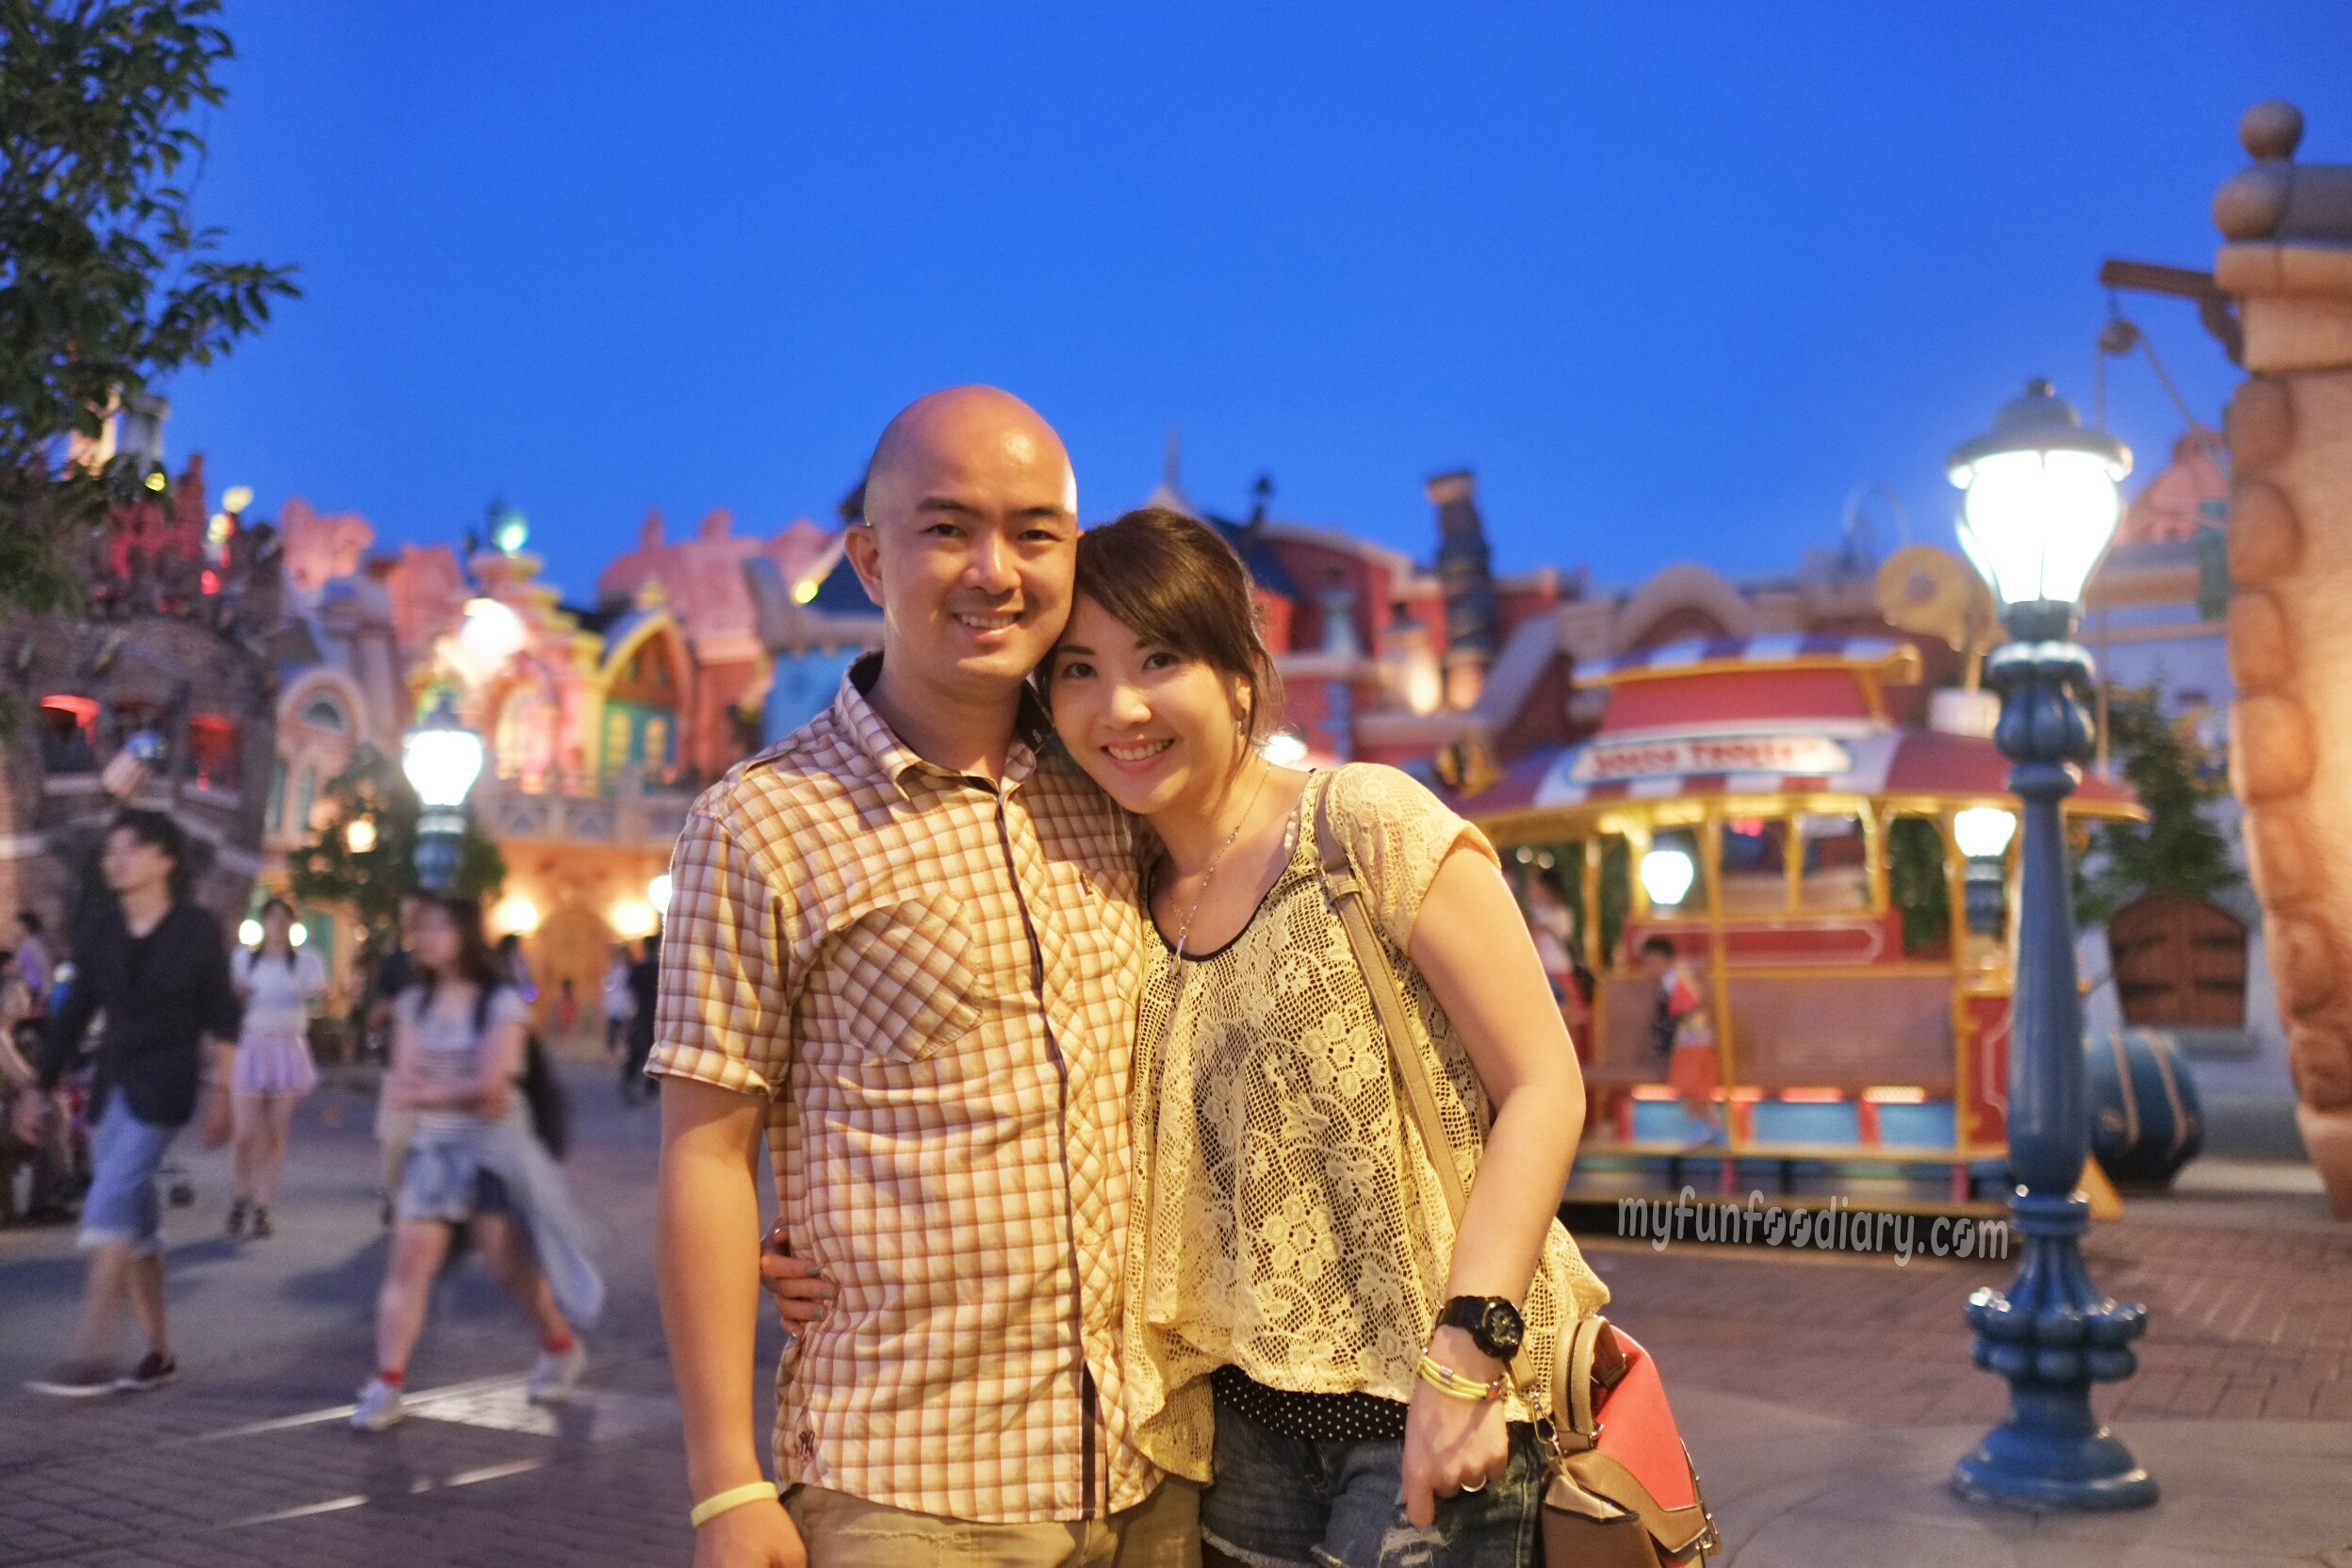 Fun at Toon Town Tokyo Disneyland by Myfunfoodiary 05